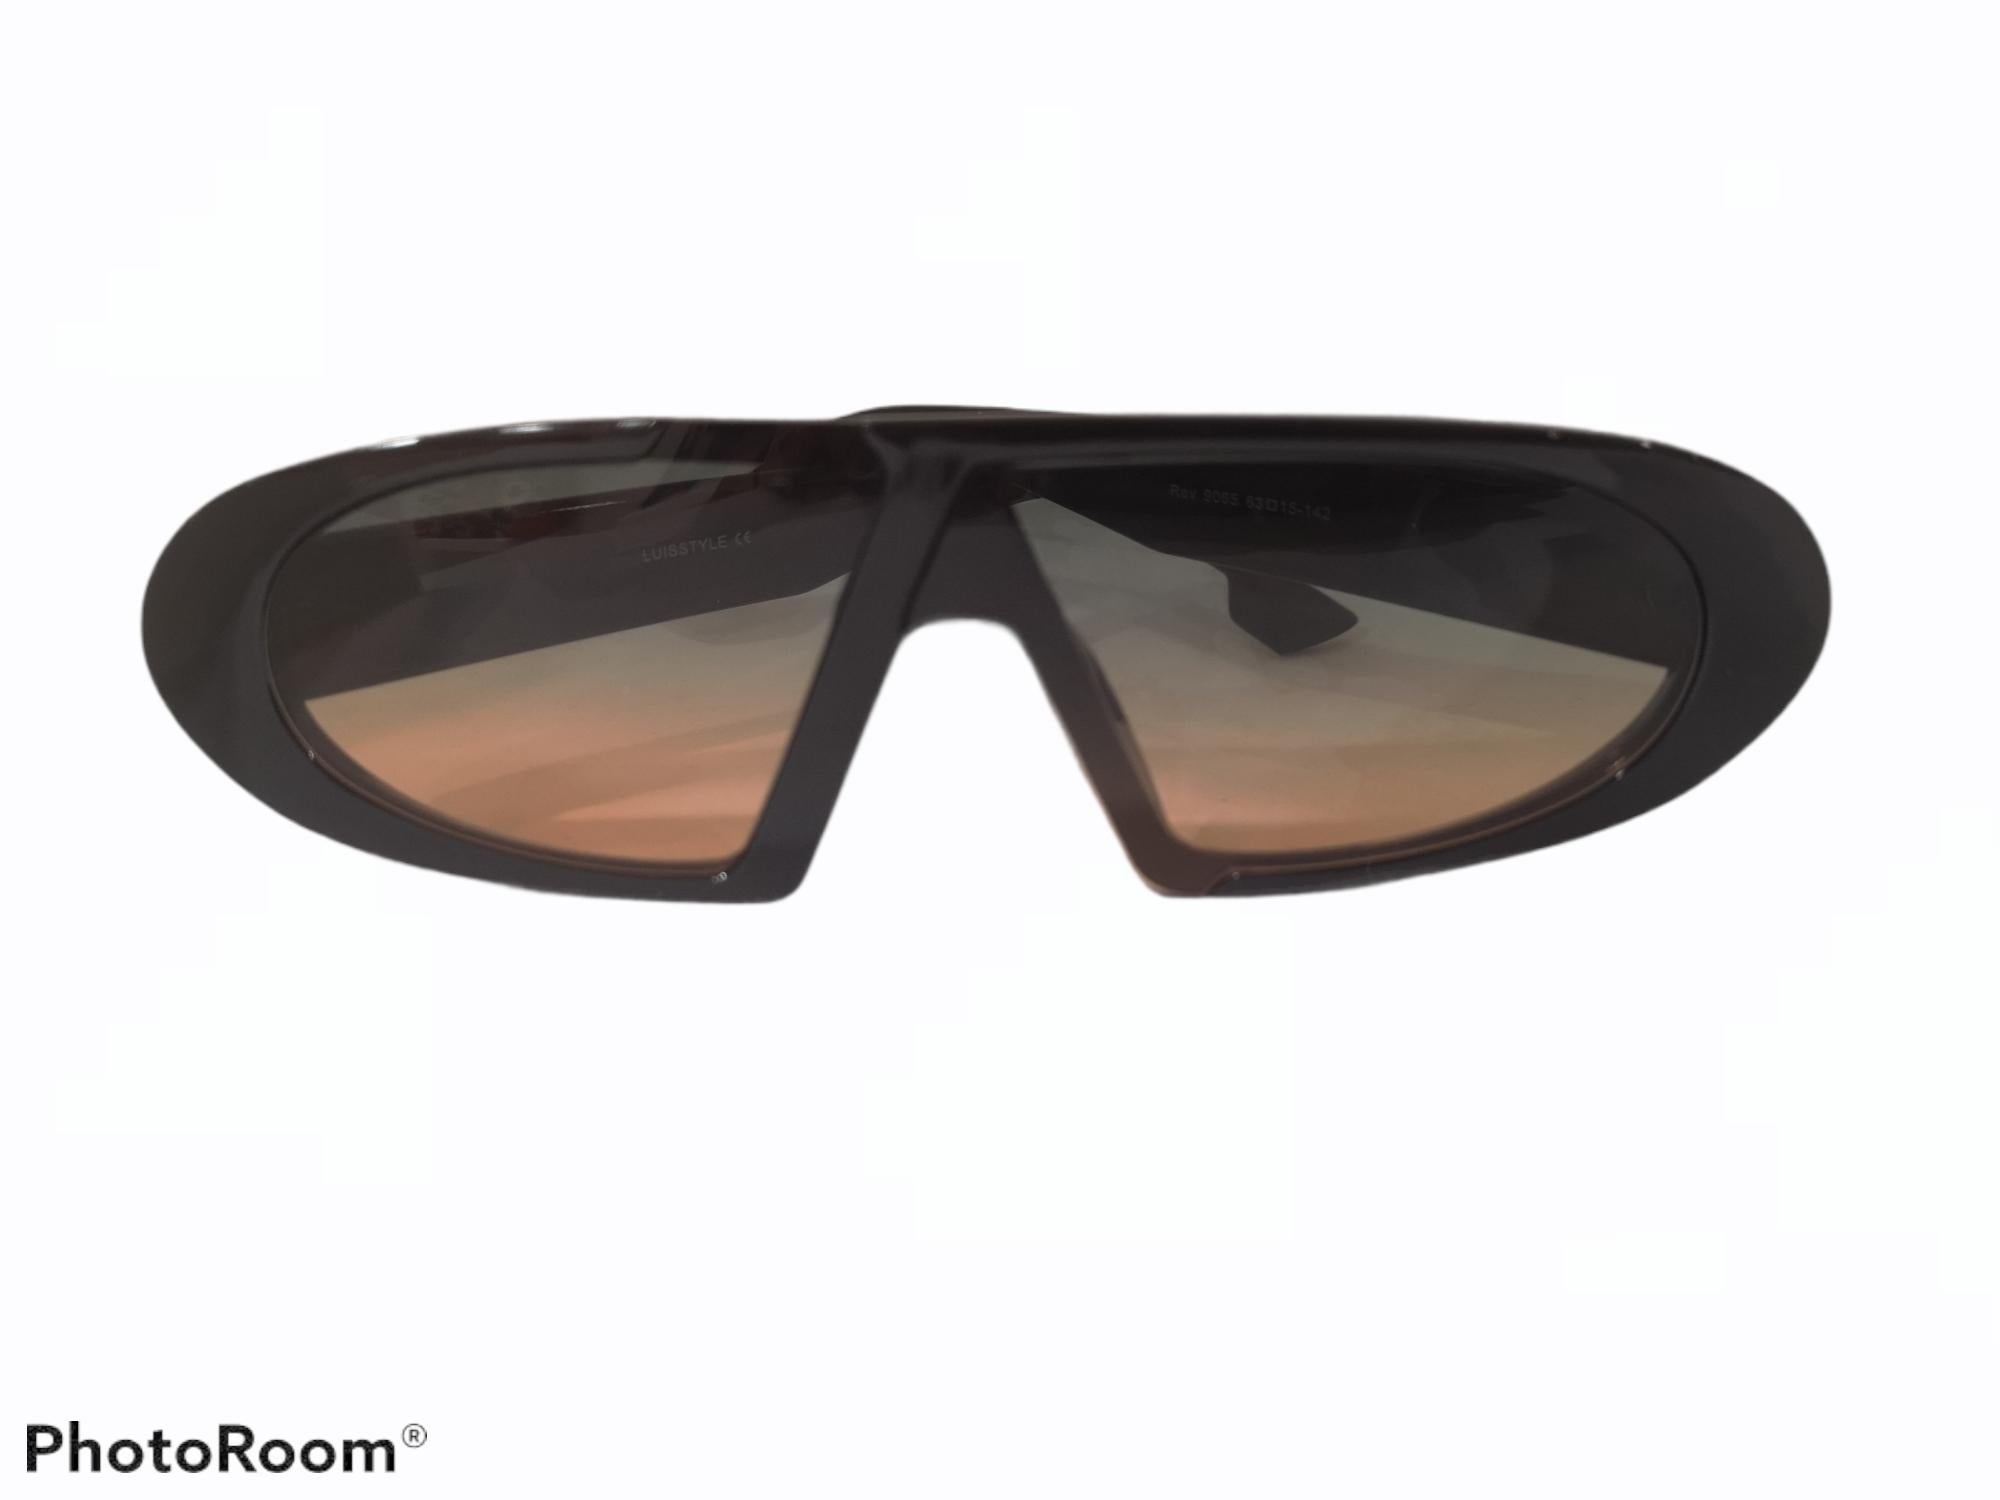 Black orange and green lens sunglasses NWOT 1